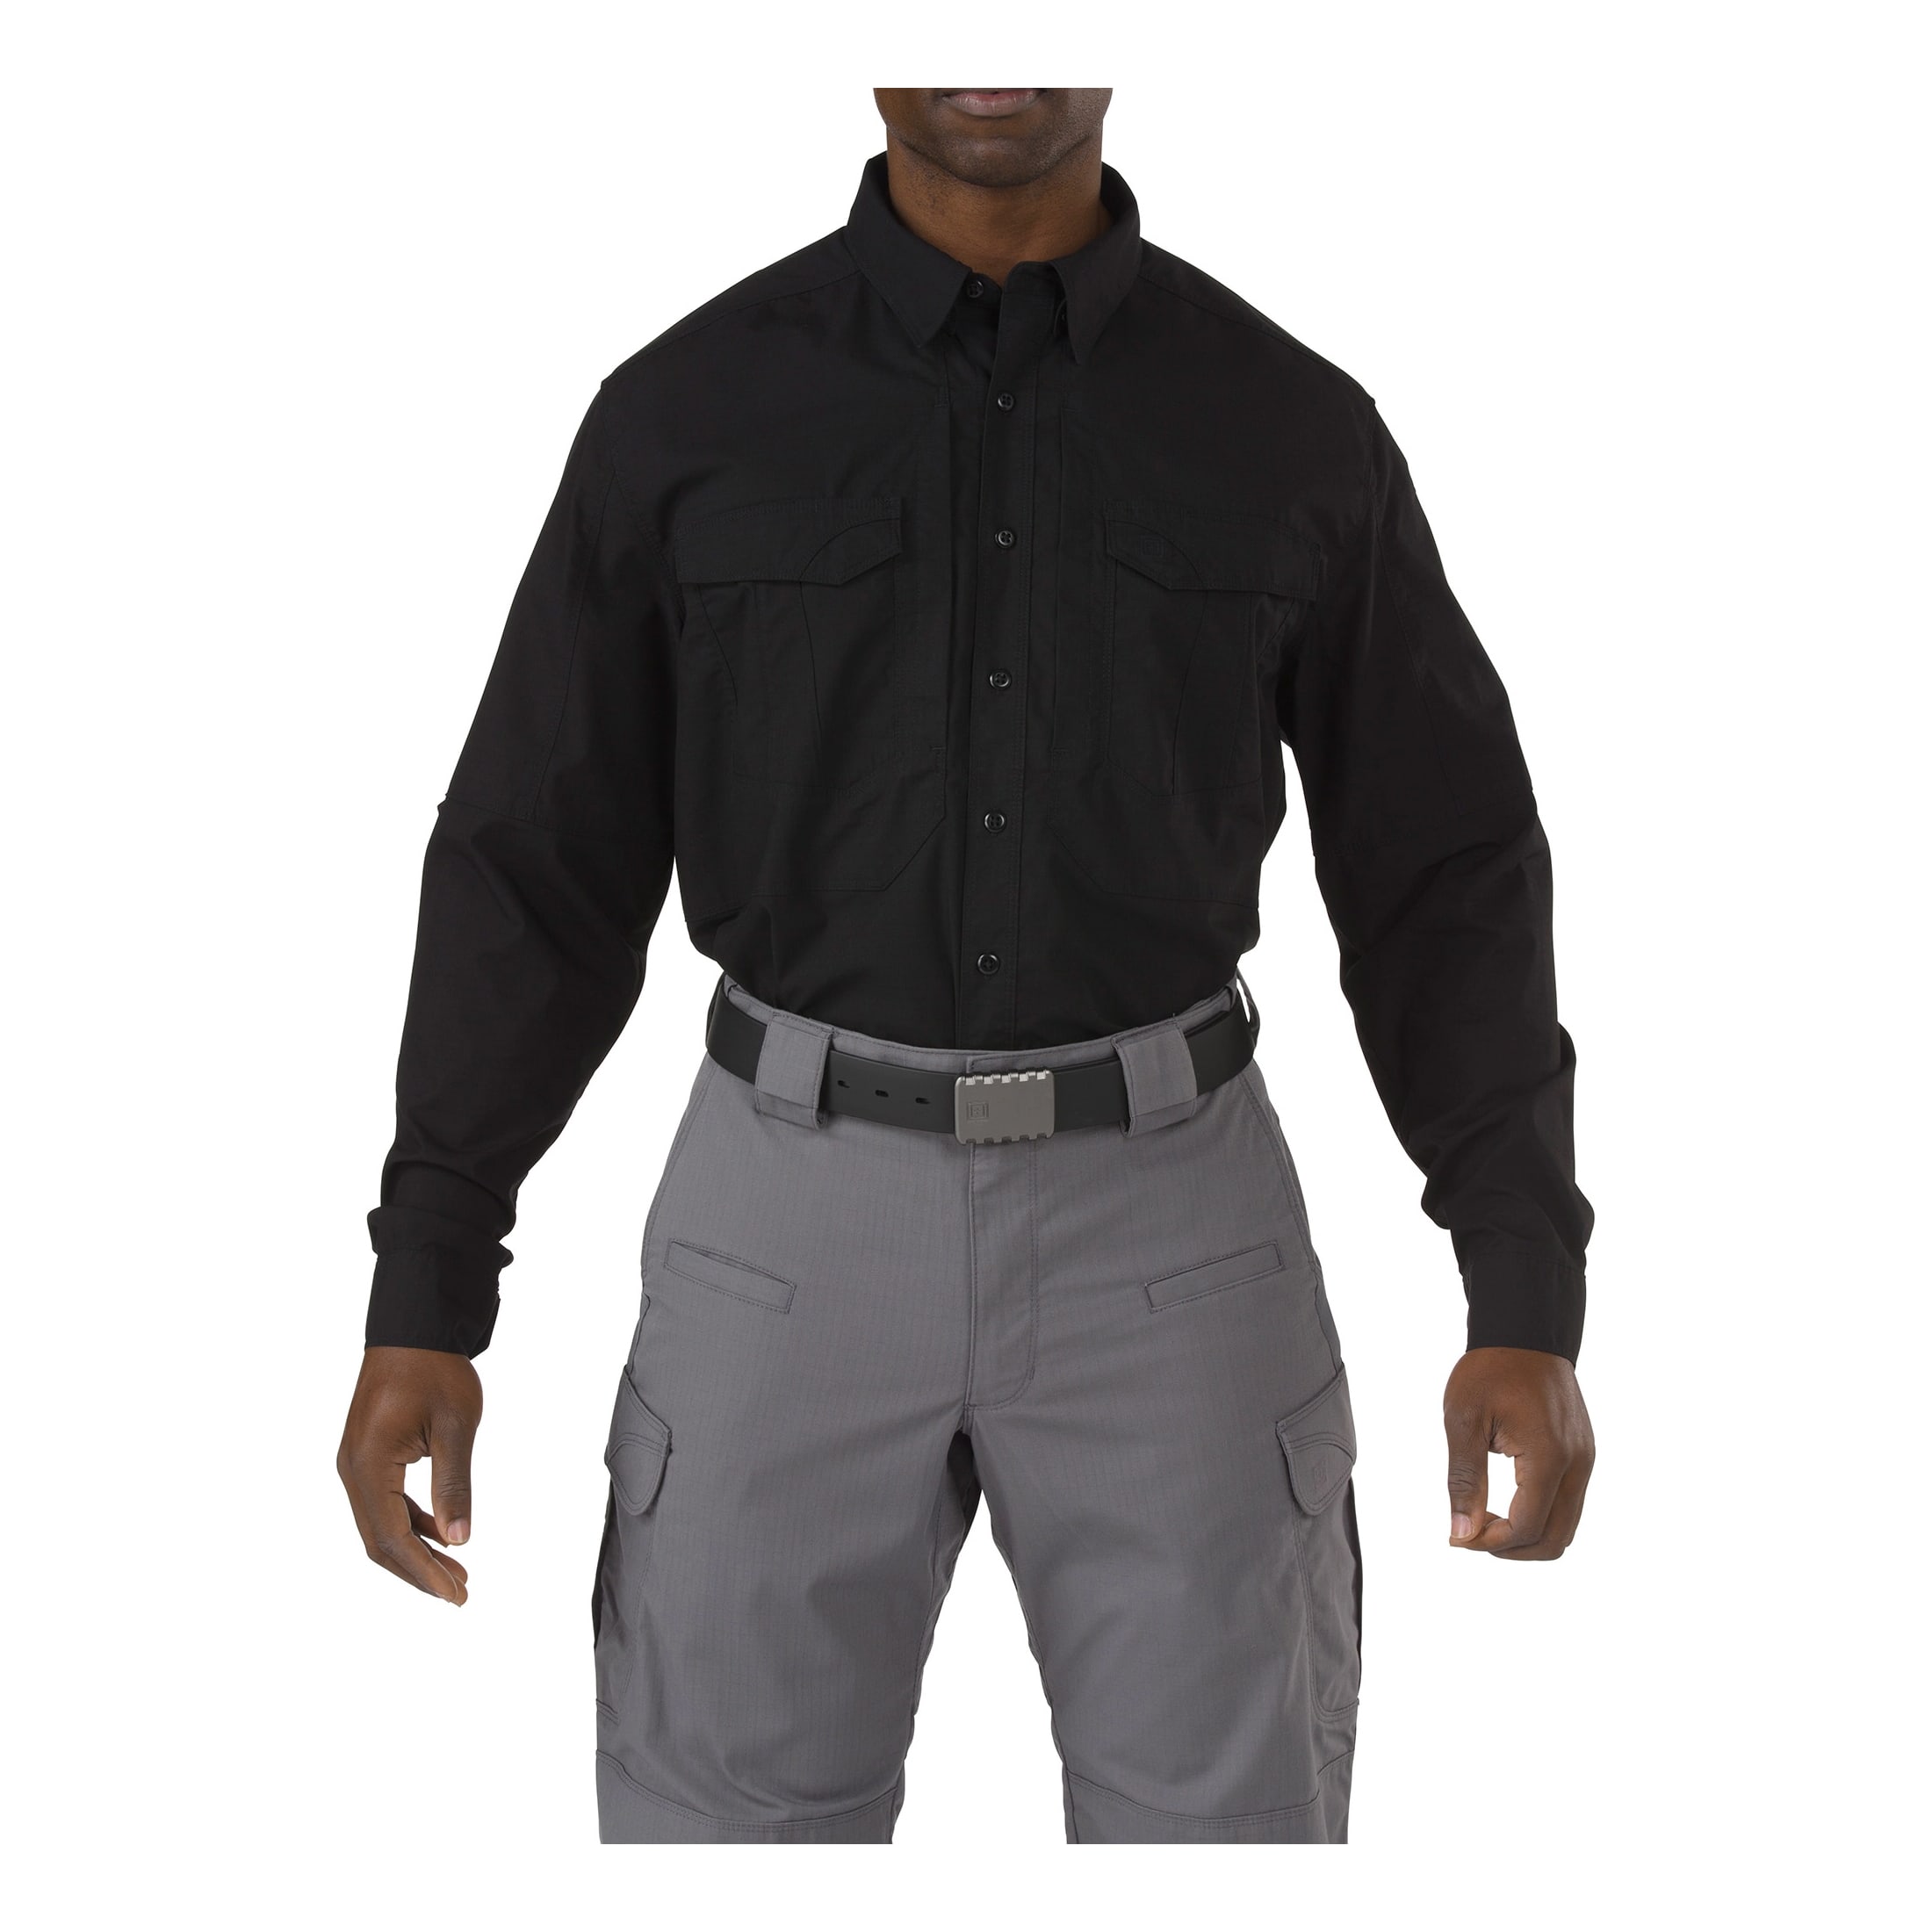 5.11 Tactical Stratos Quarter-Zip Long-Sleeve Shirt for Ladies